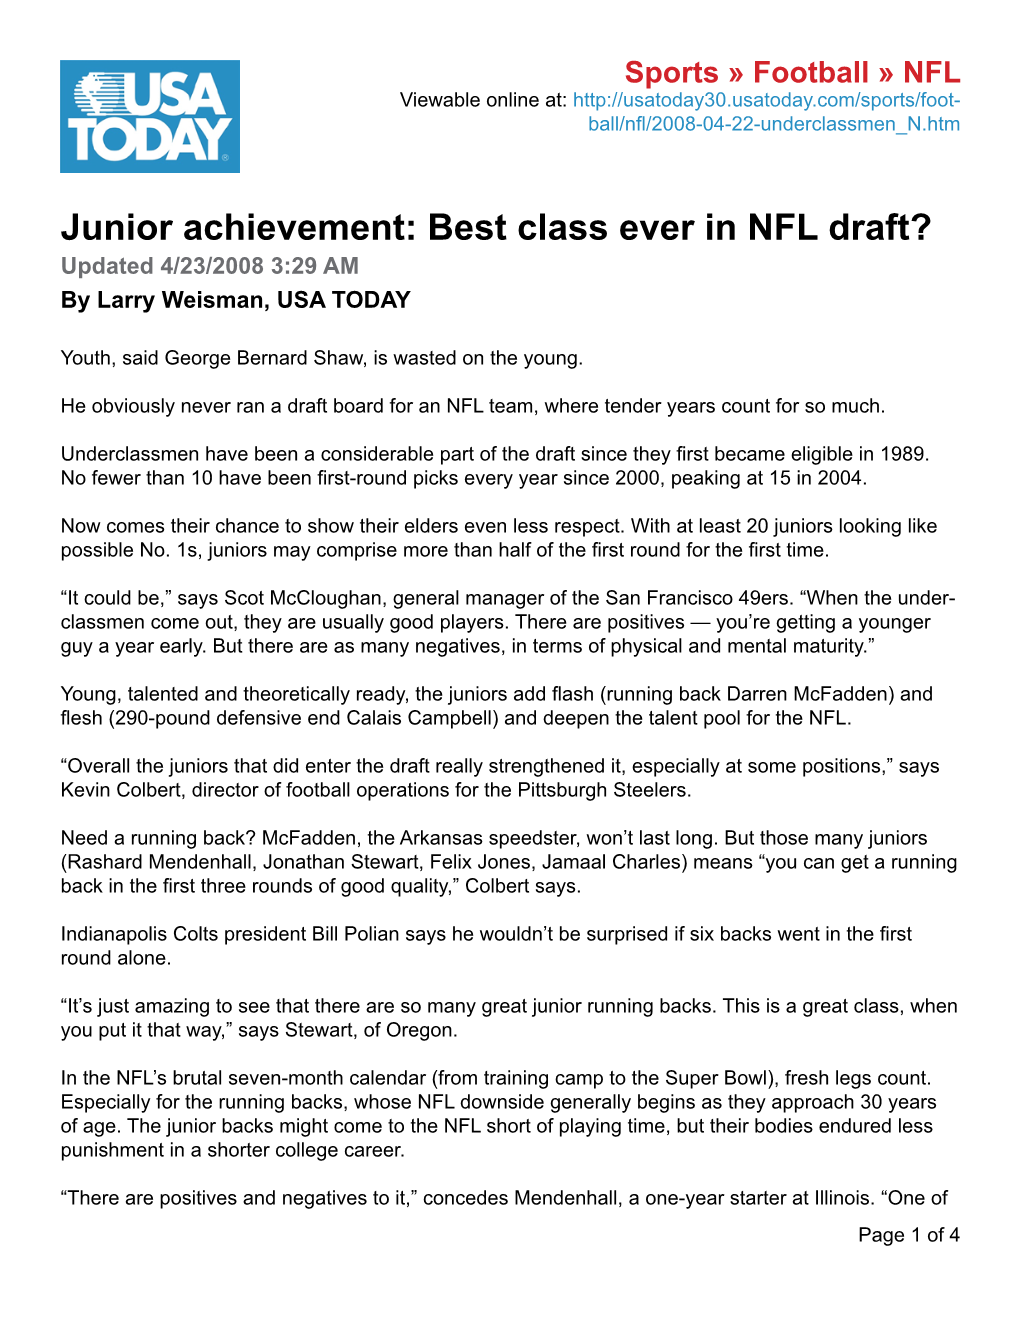 Junior Achievement: Best Class Ever in NFL Draft ? USA Today